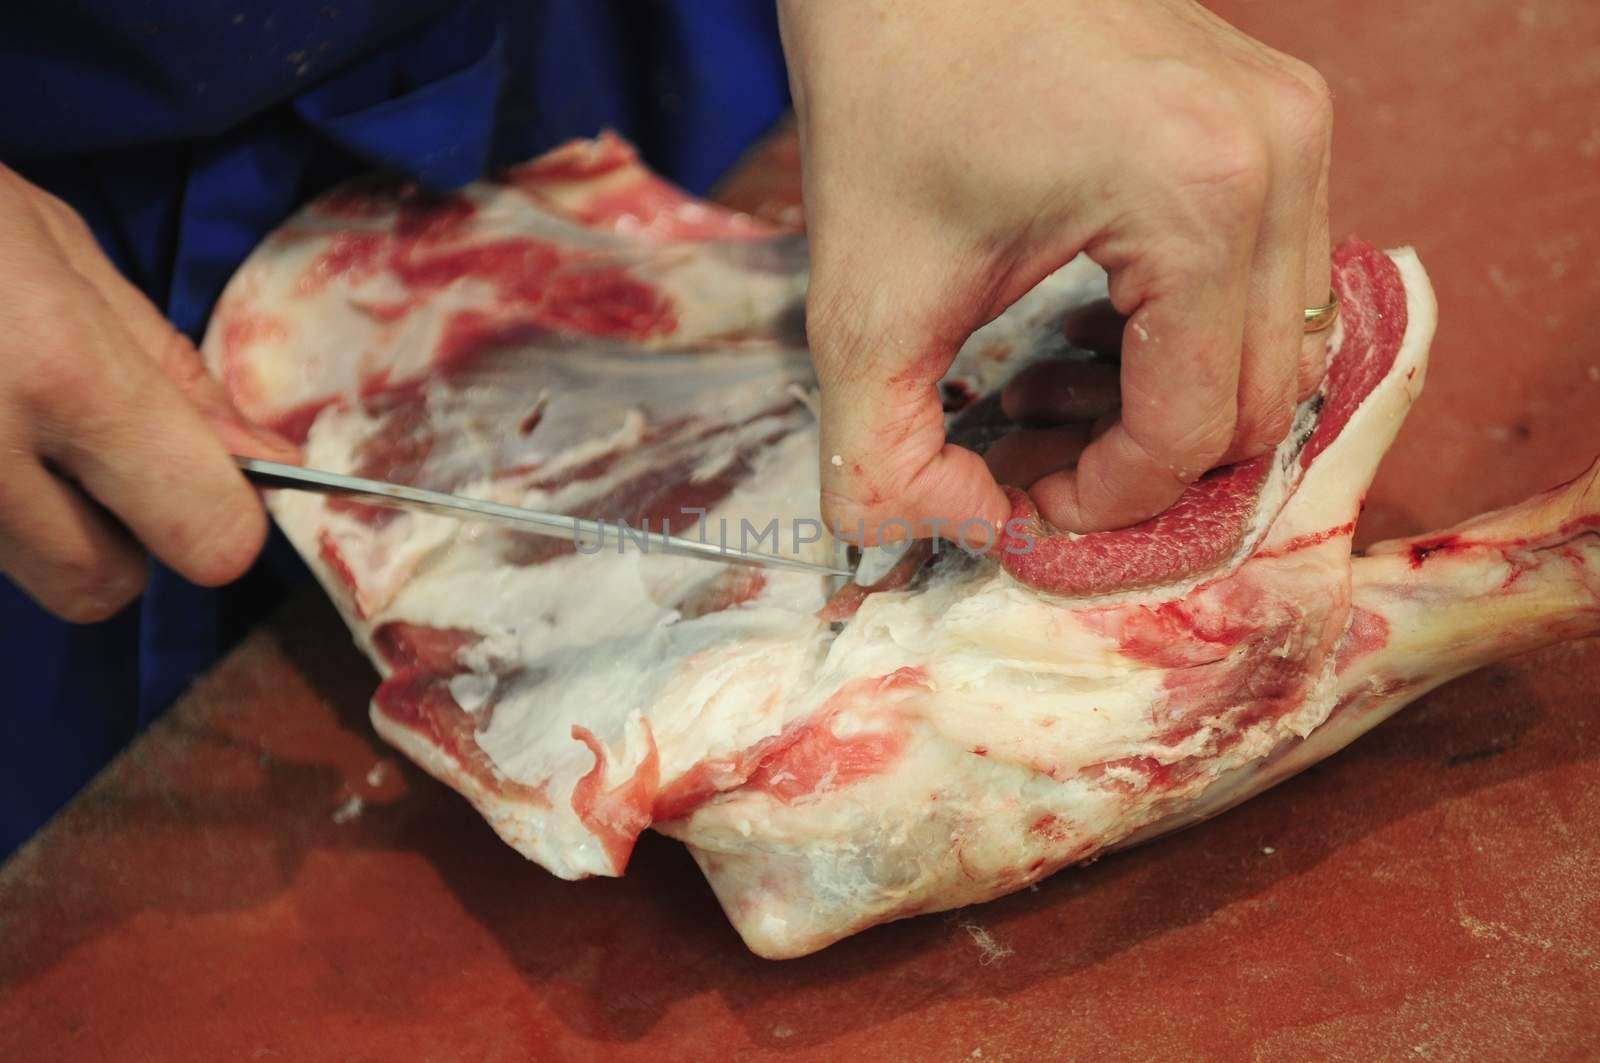 butchering meat by neil_langan